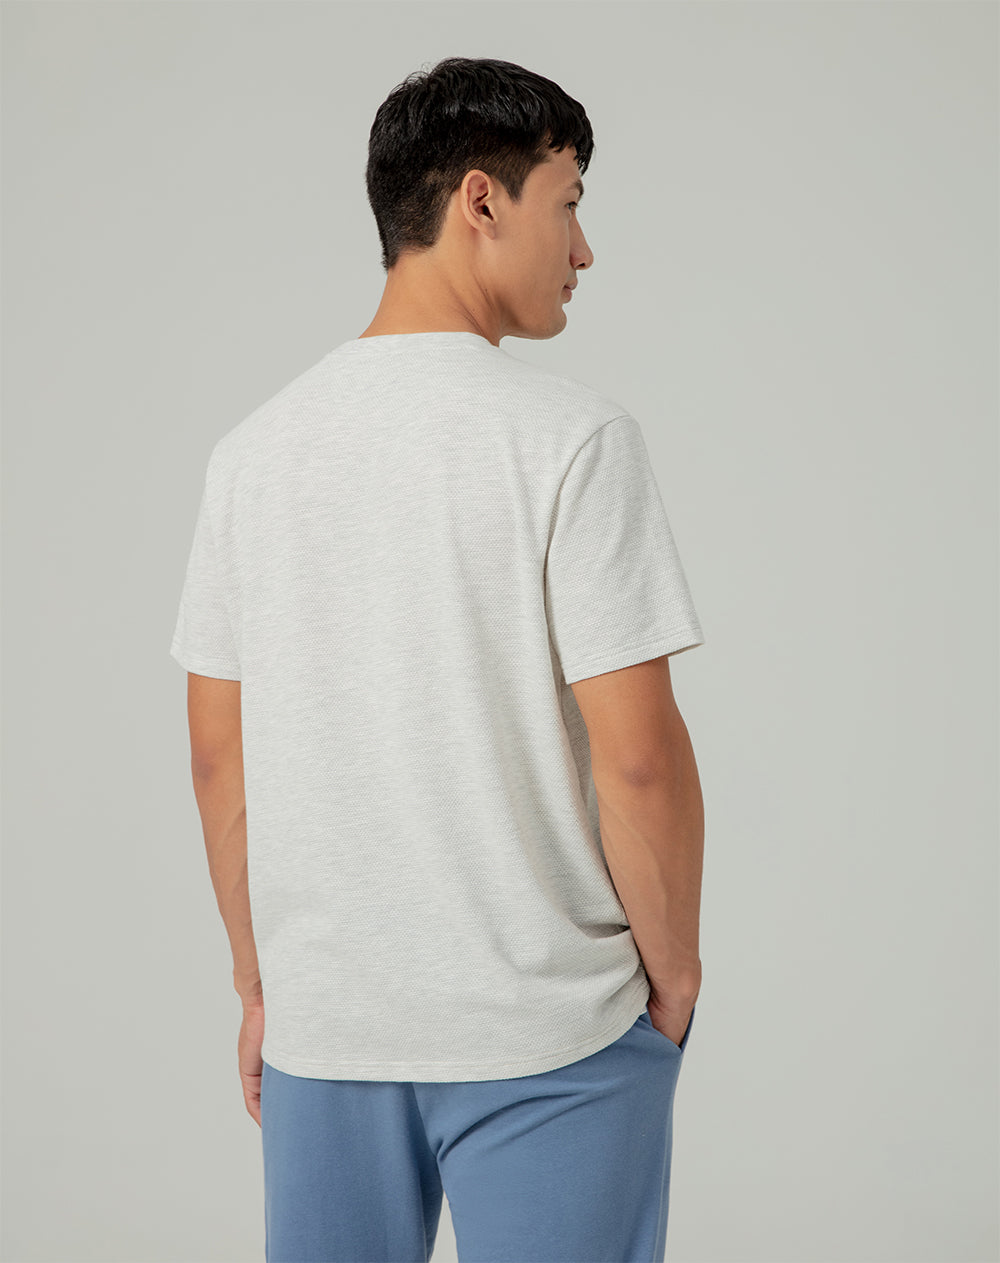 Camiseta regular fit manga corta gris jaspeada